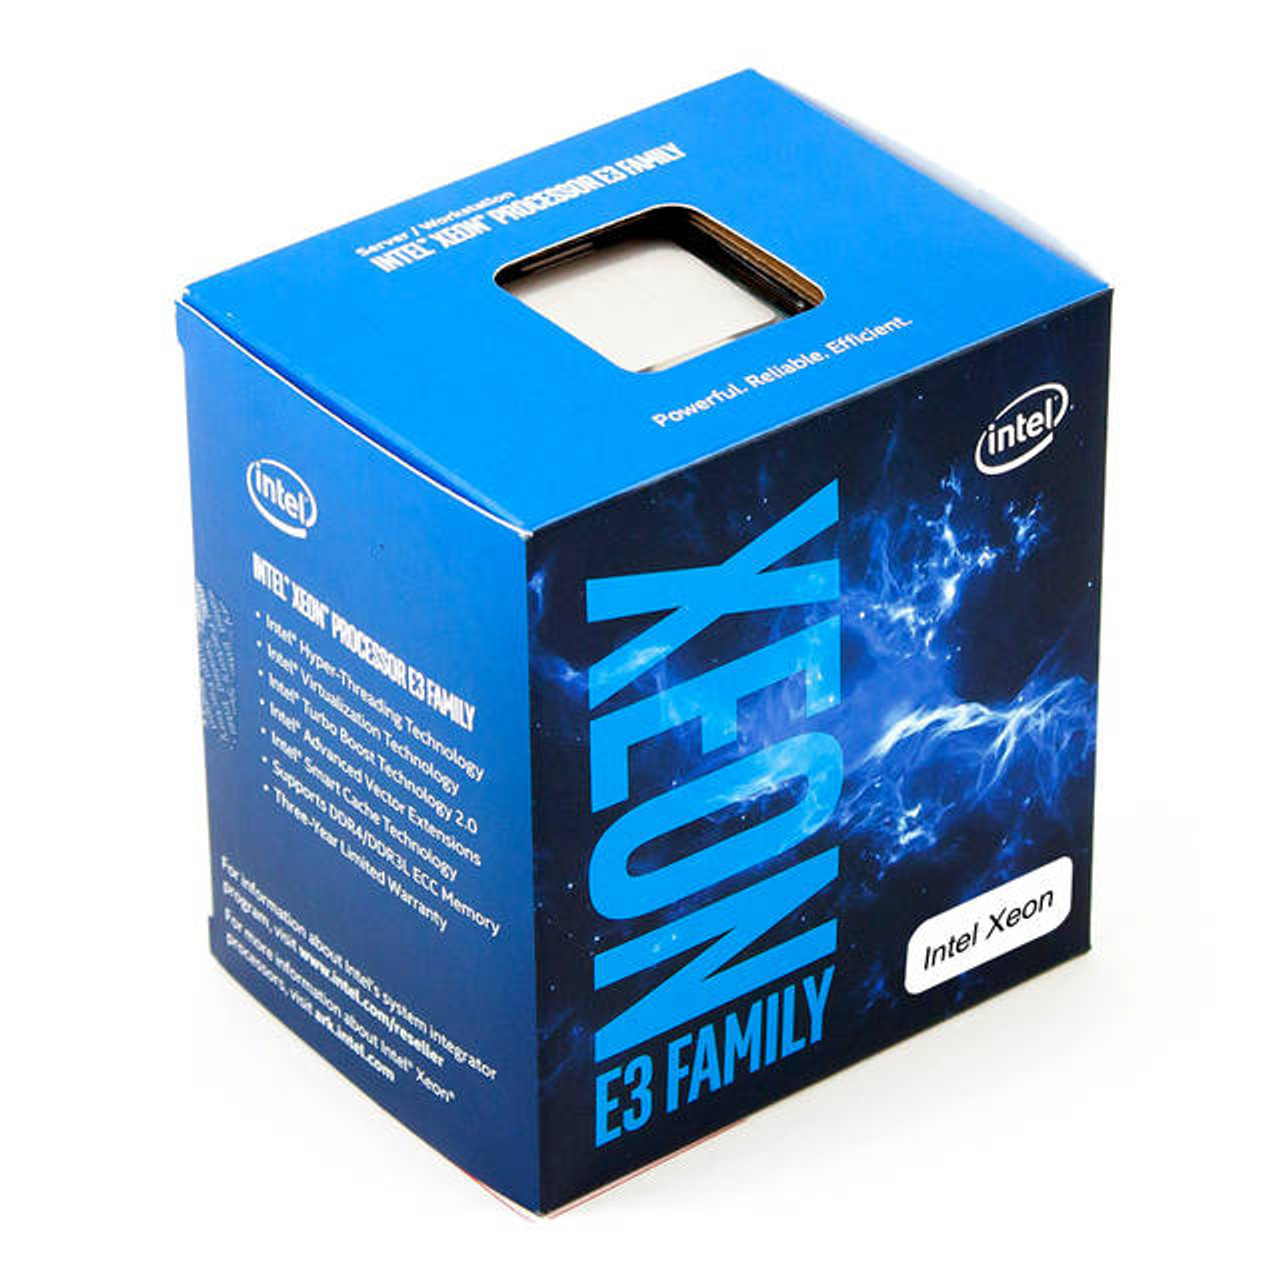 Intel Xeon E3-1240 v6 Quad-Core Kaby Lake Processor 3.7GHz 8.0GT/s 8MB LGA 1151 CPU, Retail